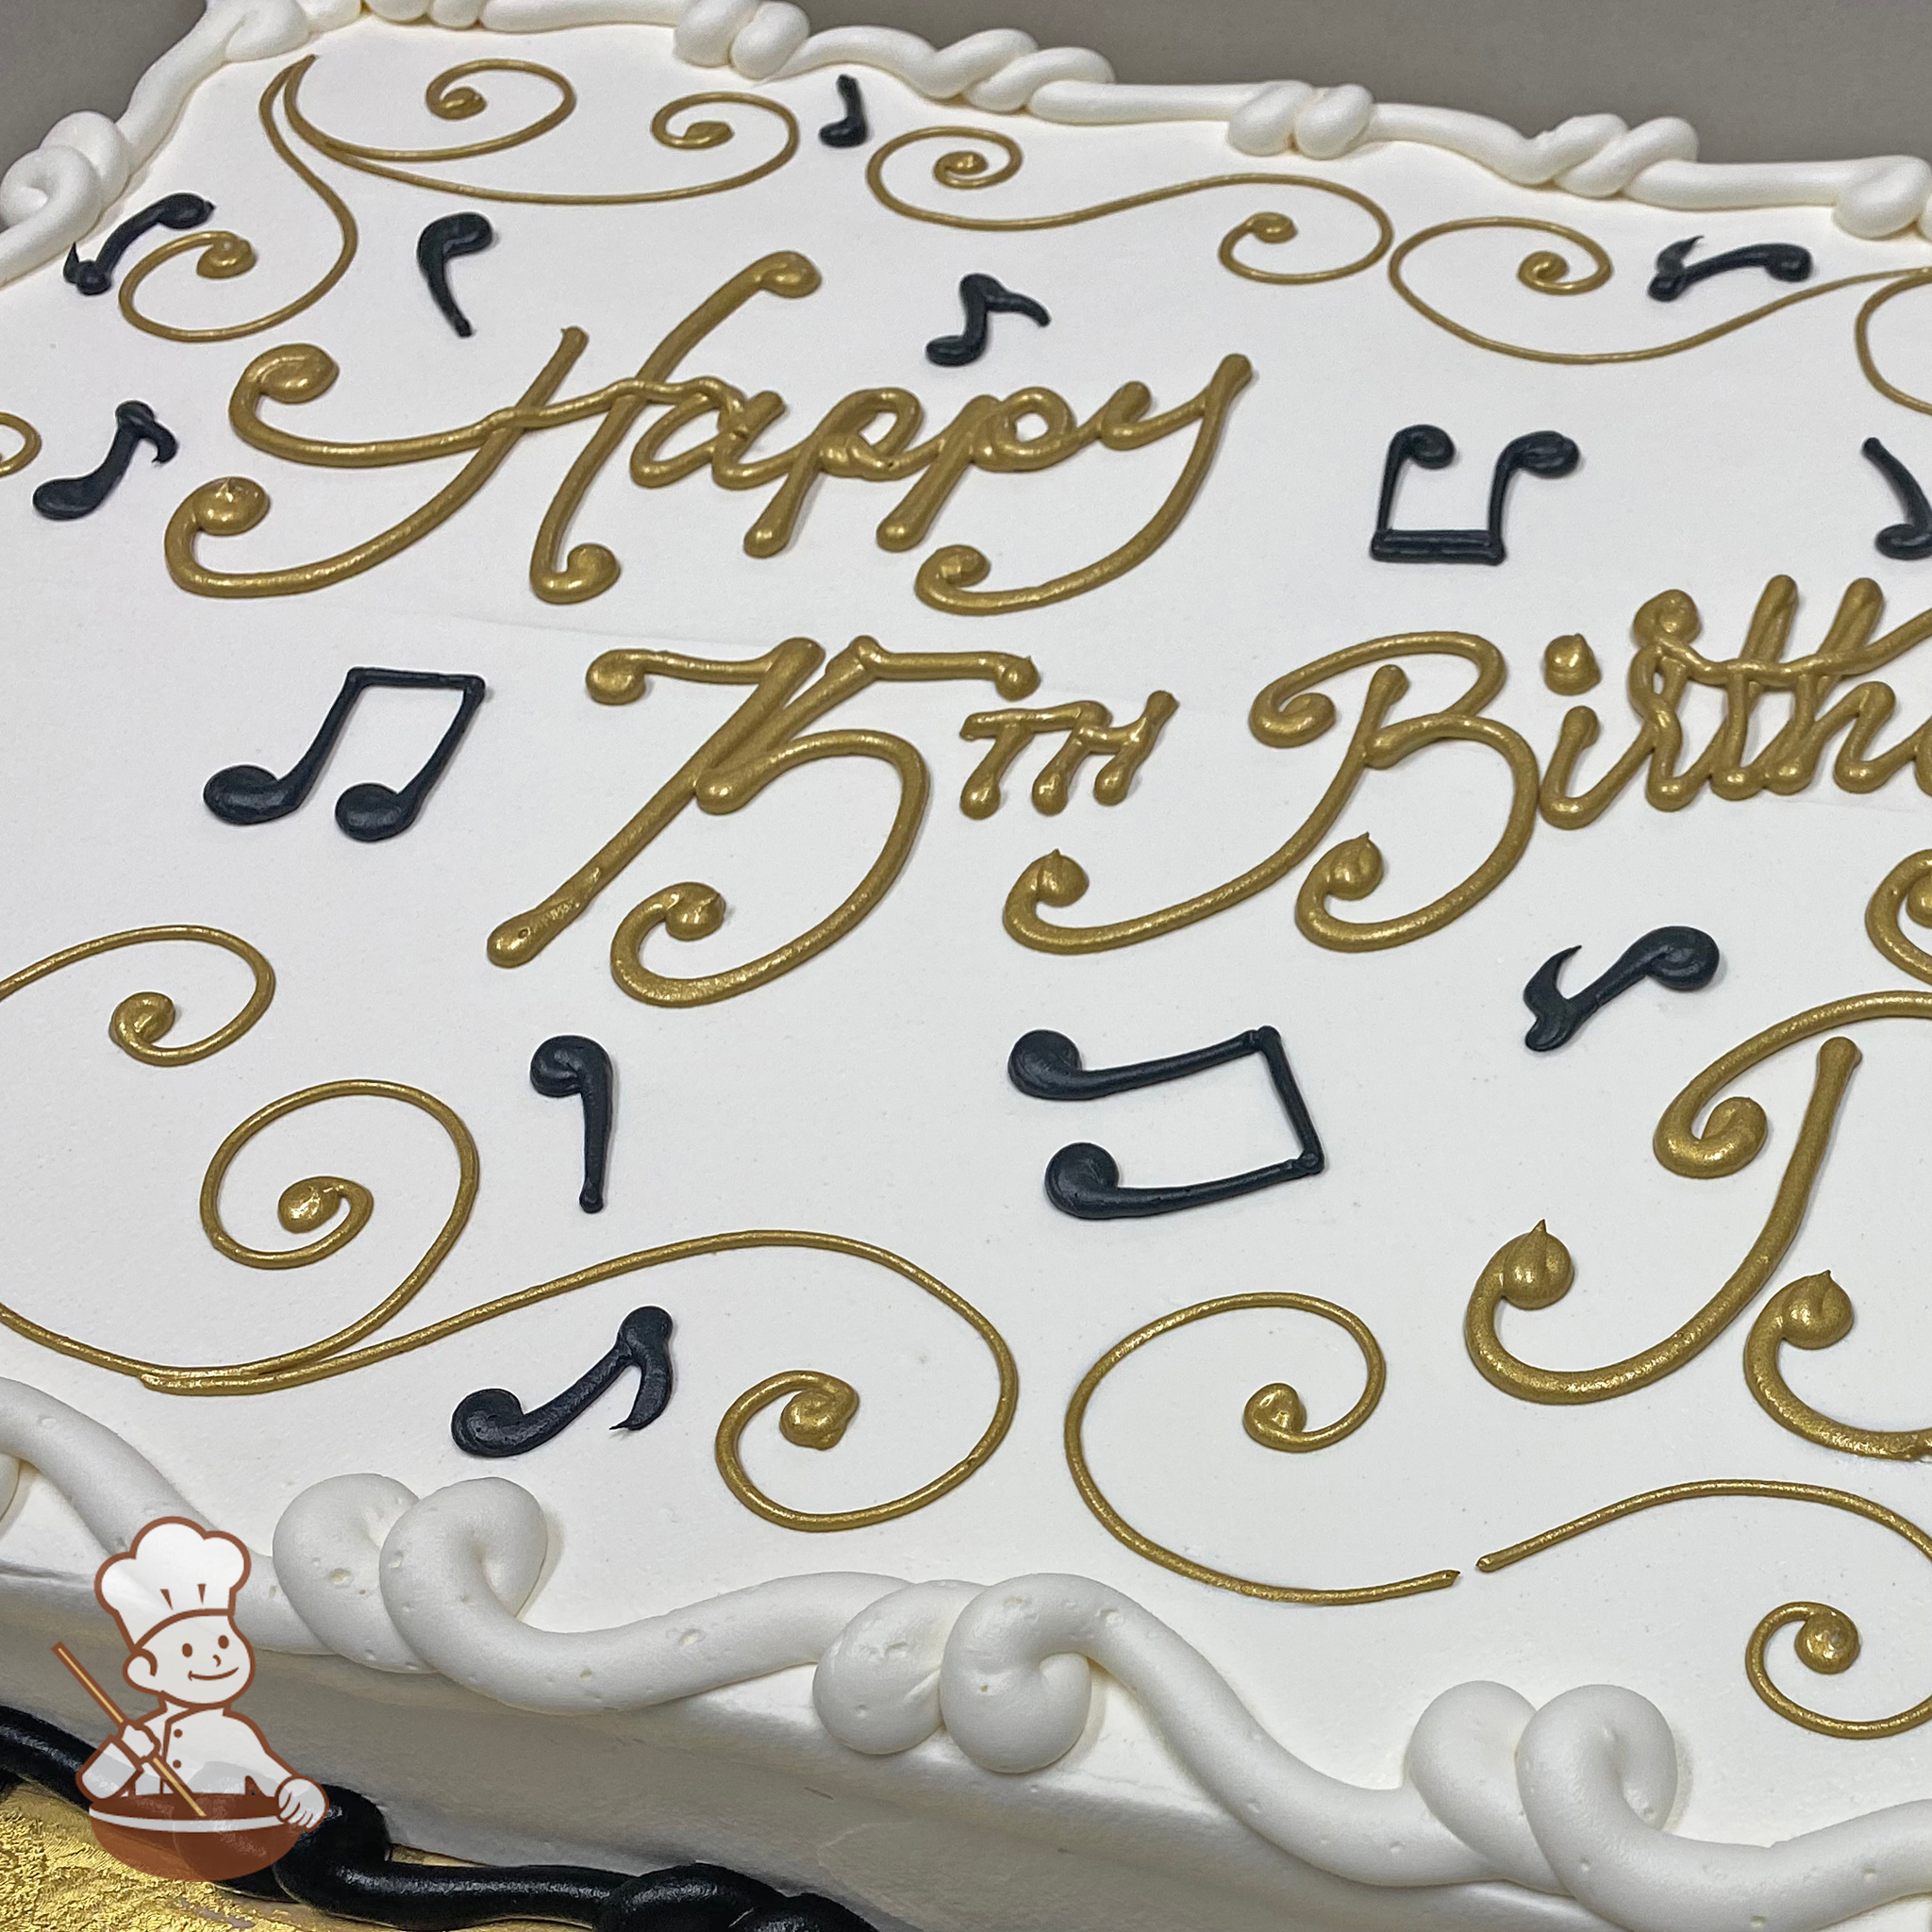 BYSP2264 Sheet Cake double writing cake | 3 Brothers Bakery | Flickr